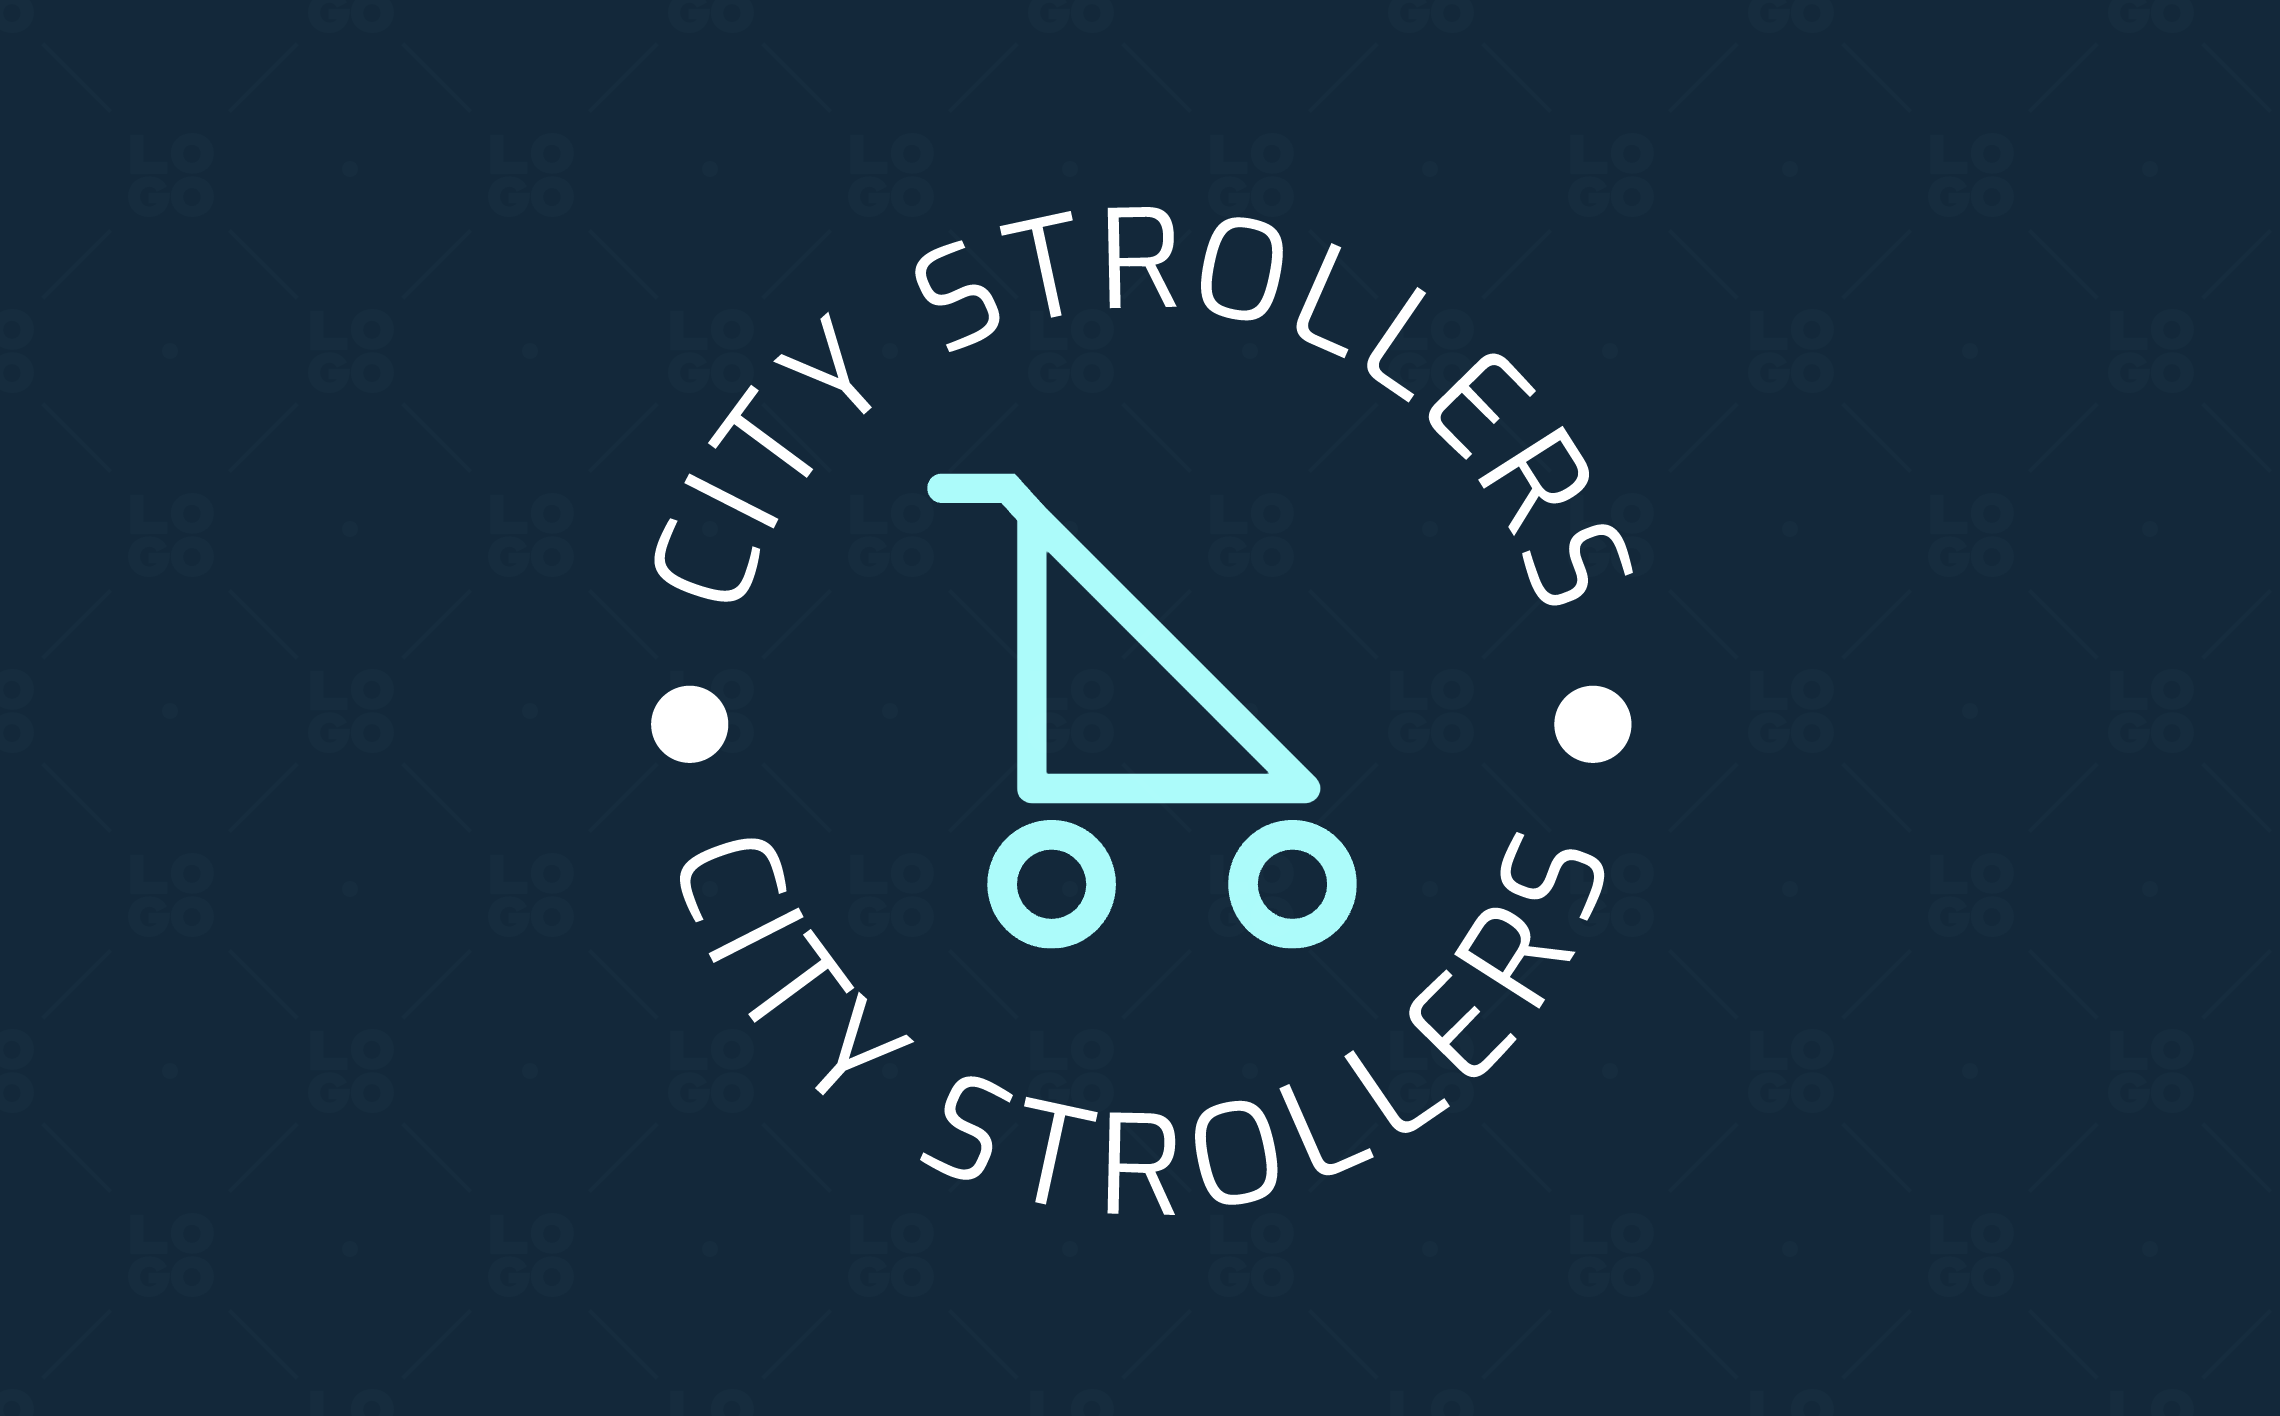 CityStrollers.com